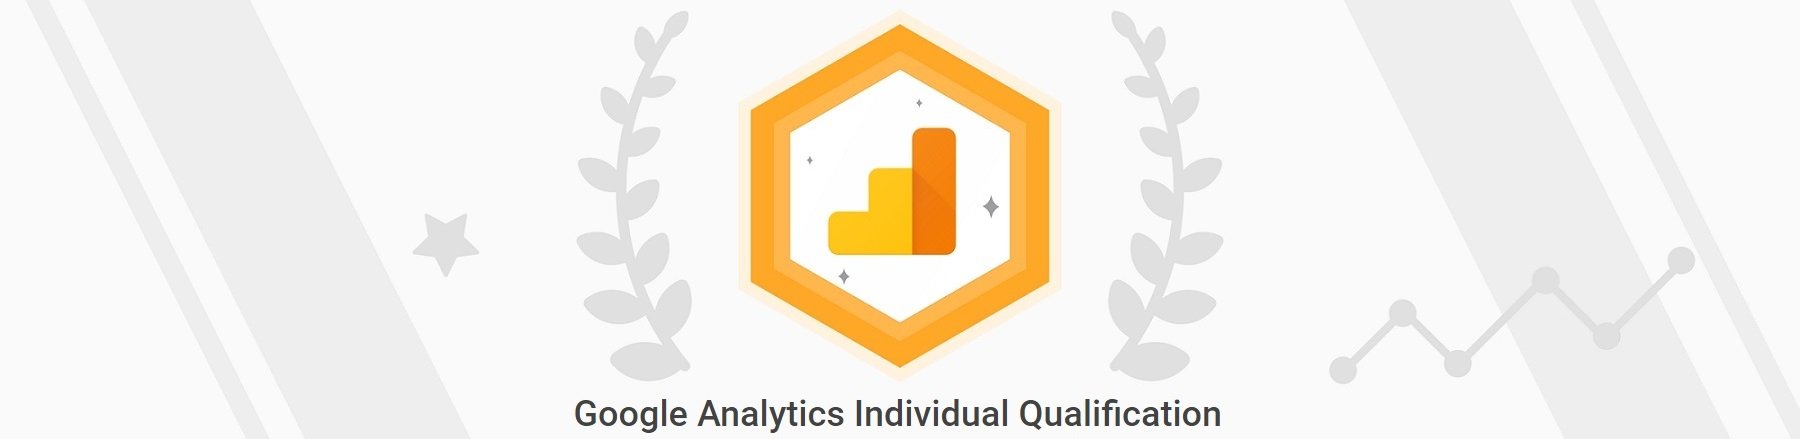 google analytics iq certification